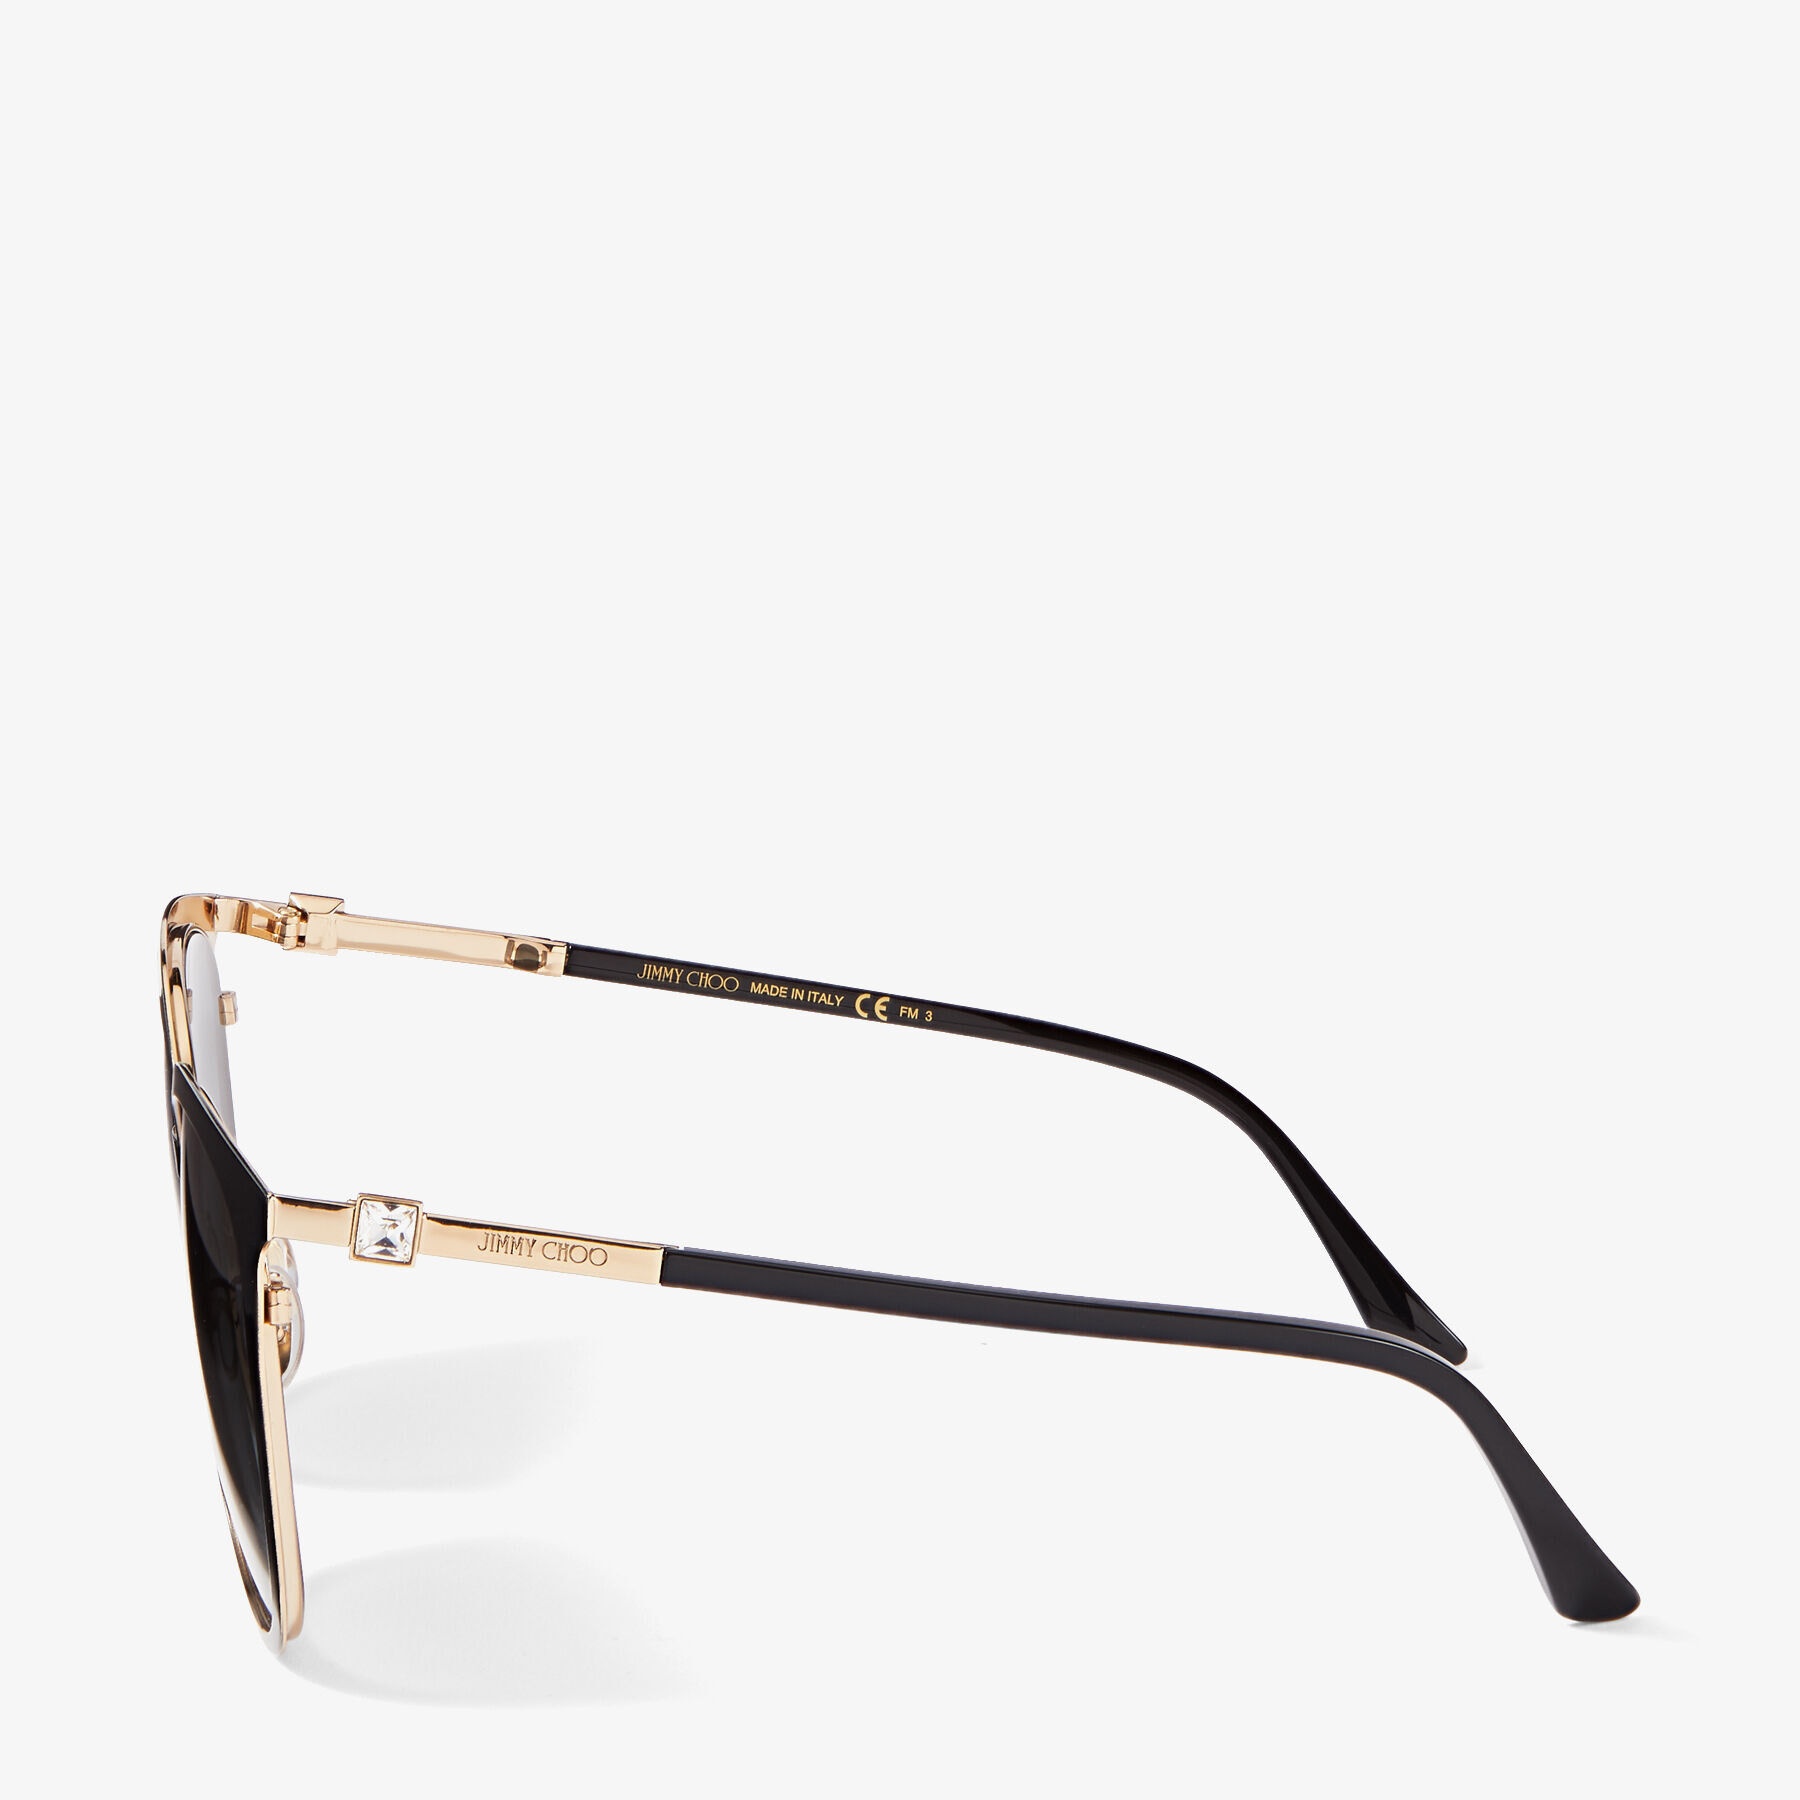 Oria
Black Cat-Eye Sunglasses with Swarovski Crystals - 2